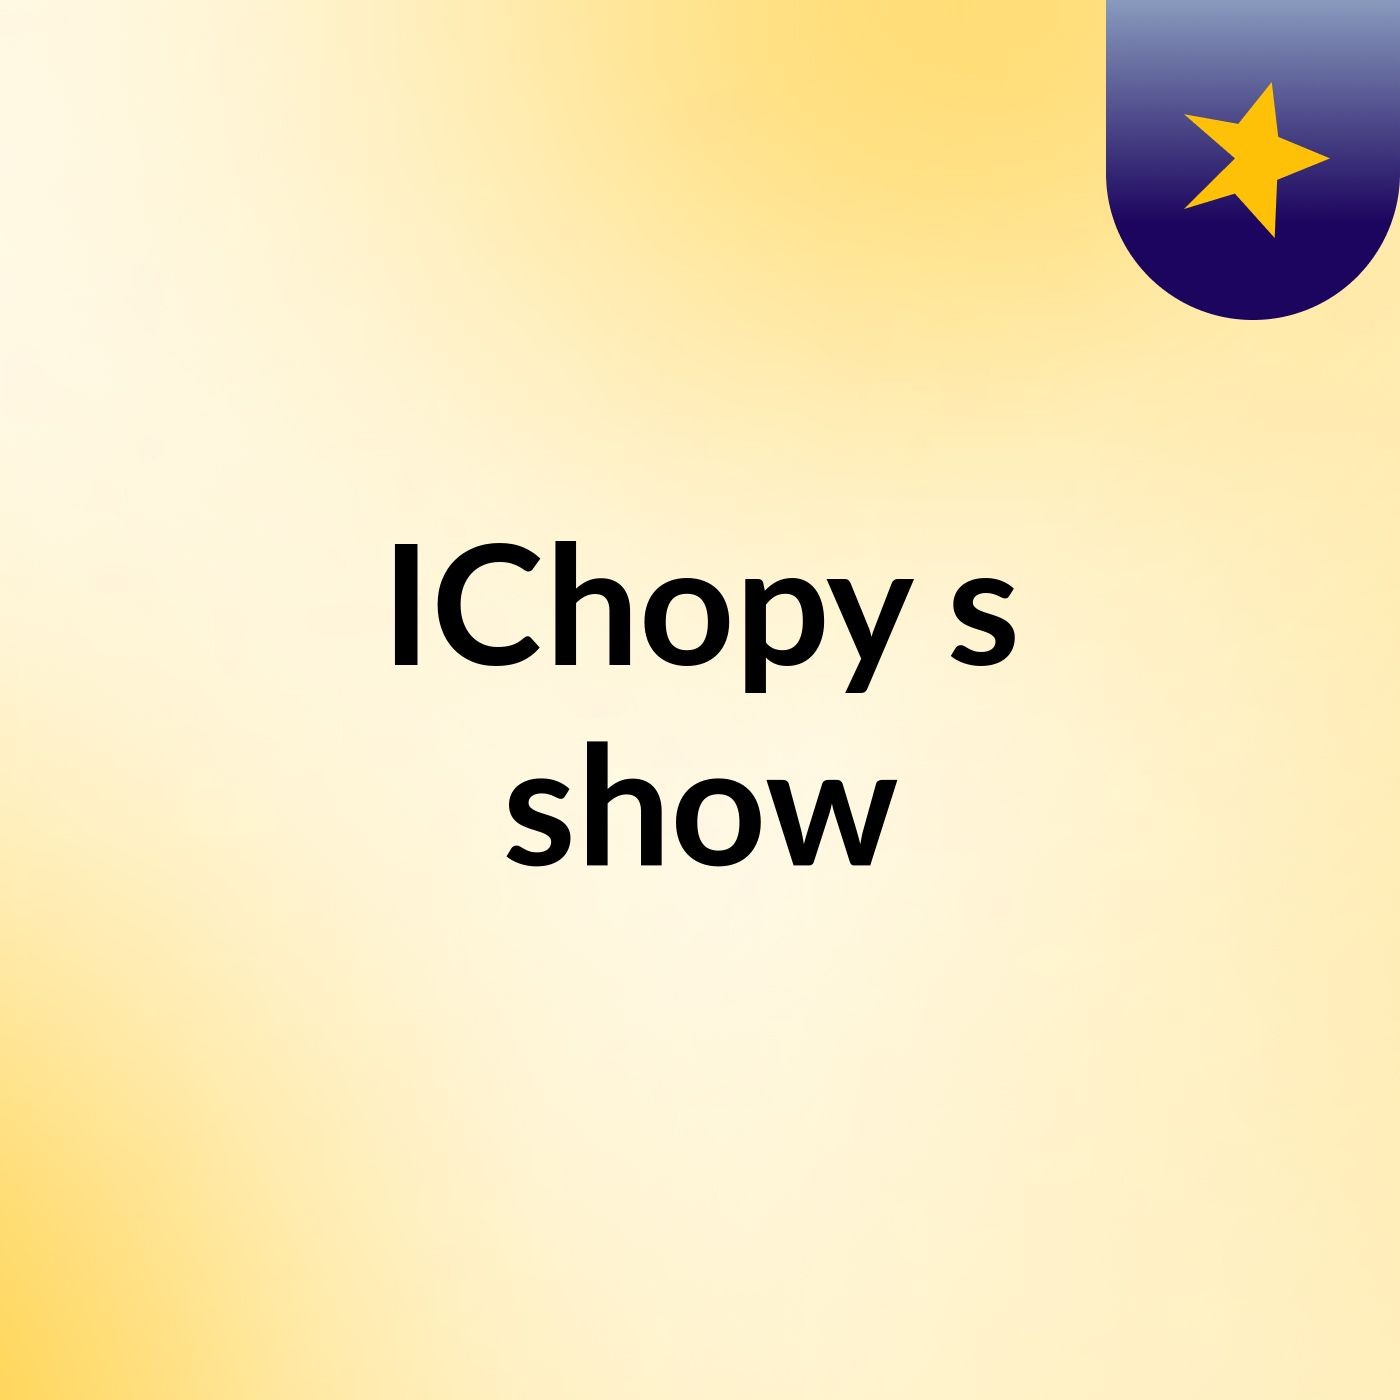 IChopy's show